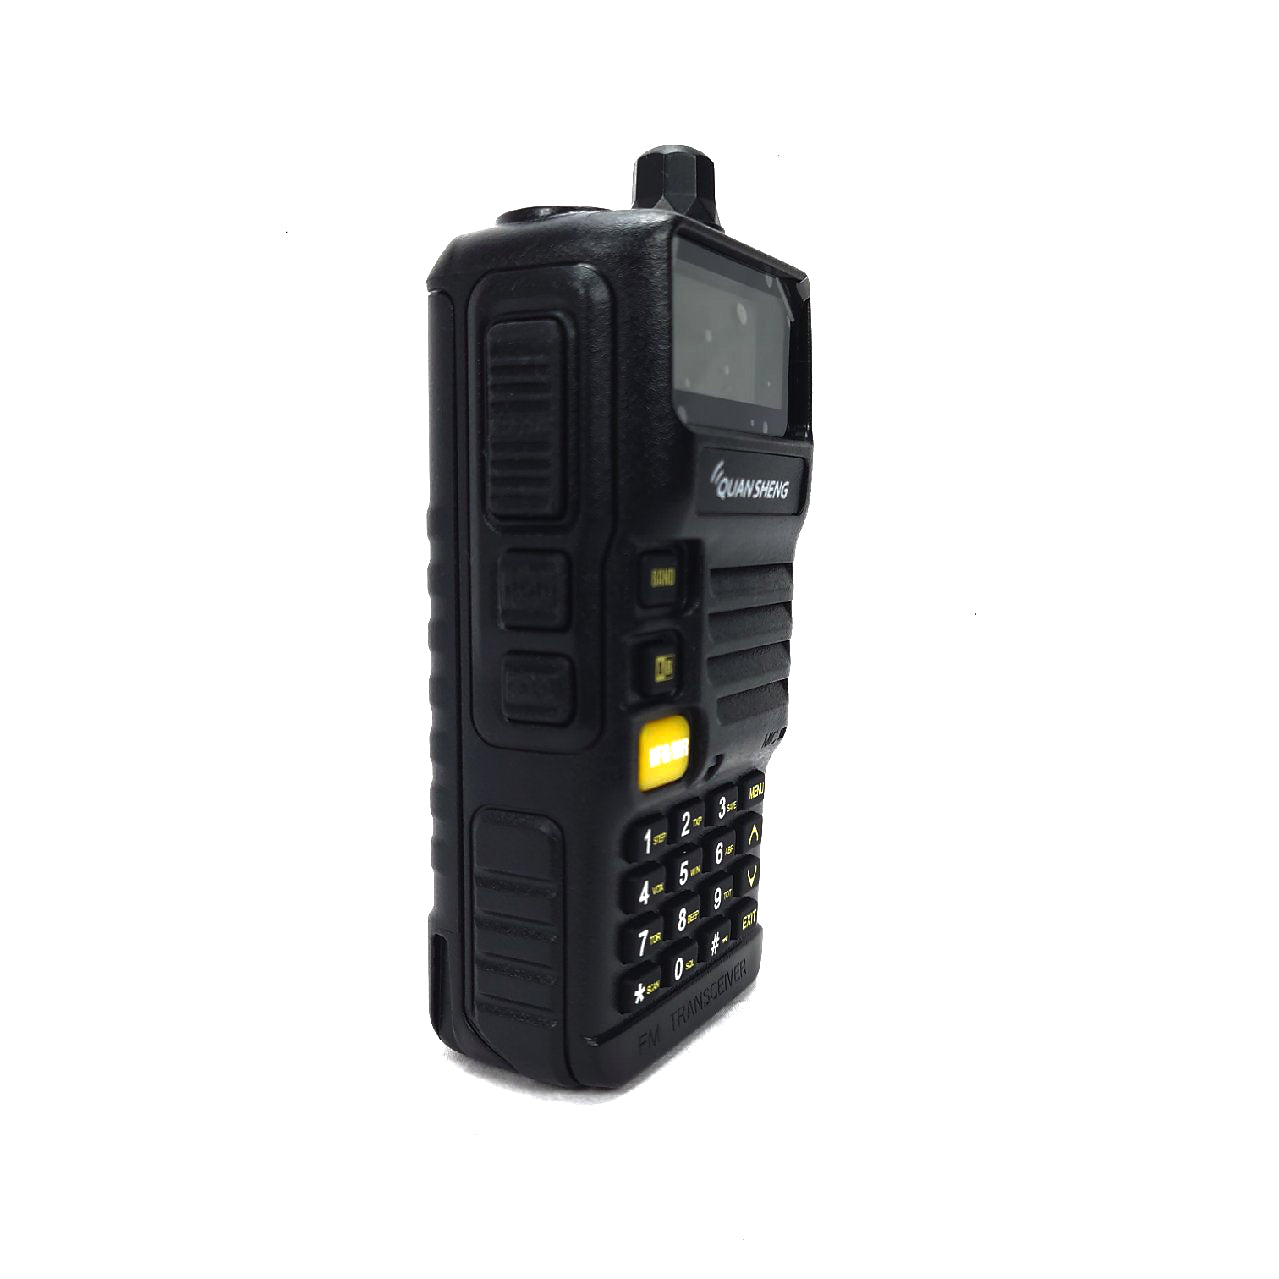 Quansheng UV-R50 2m/70cm Handheld Transceiver